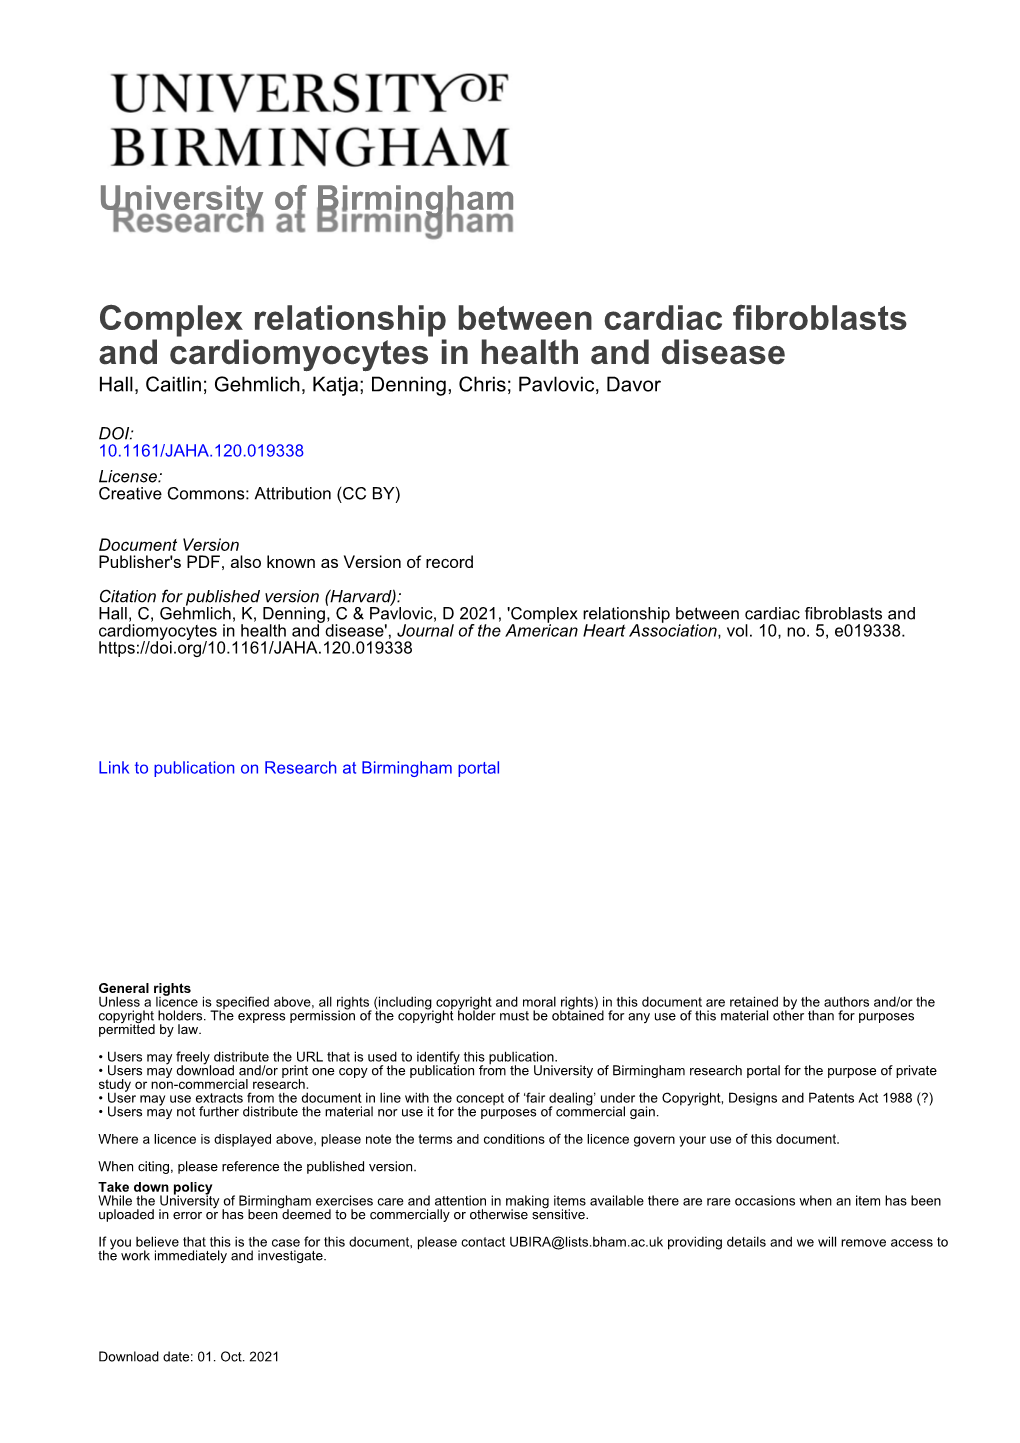 Complex Relationship Between Cardiac Fibroblasts and Cardiomyocytes in Health and Disease Hall, Caitlin; Gehmlich, Katja; Denning, Chris; Pavlovic, Davor